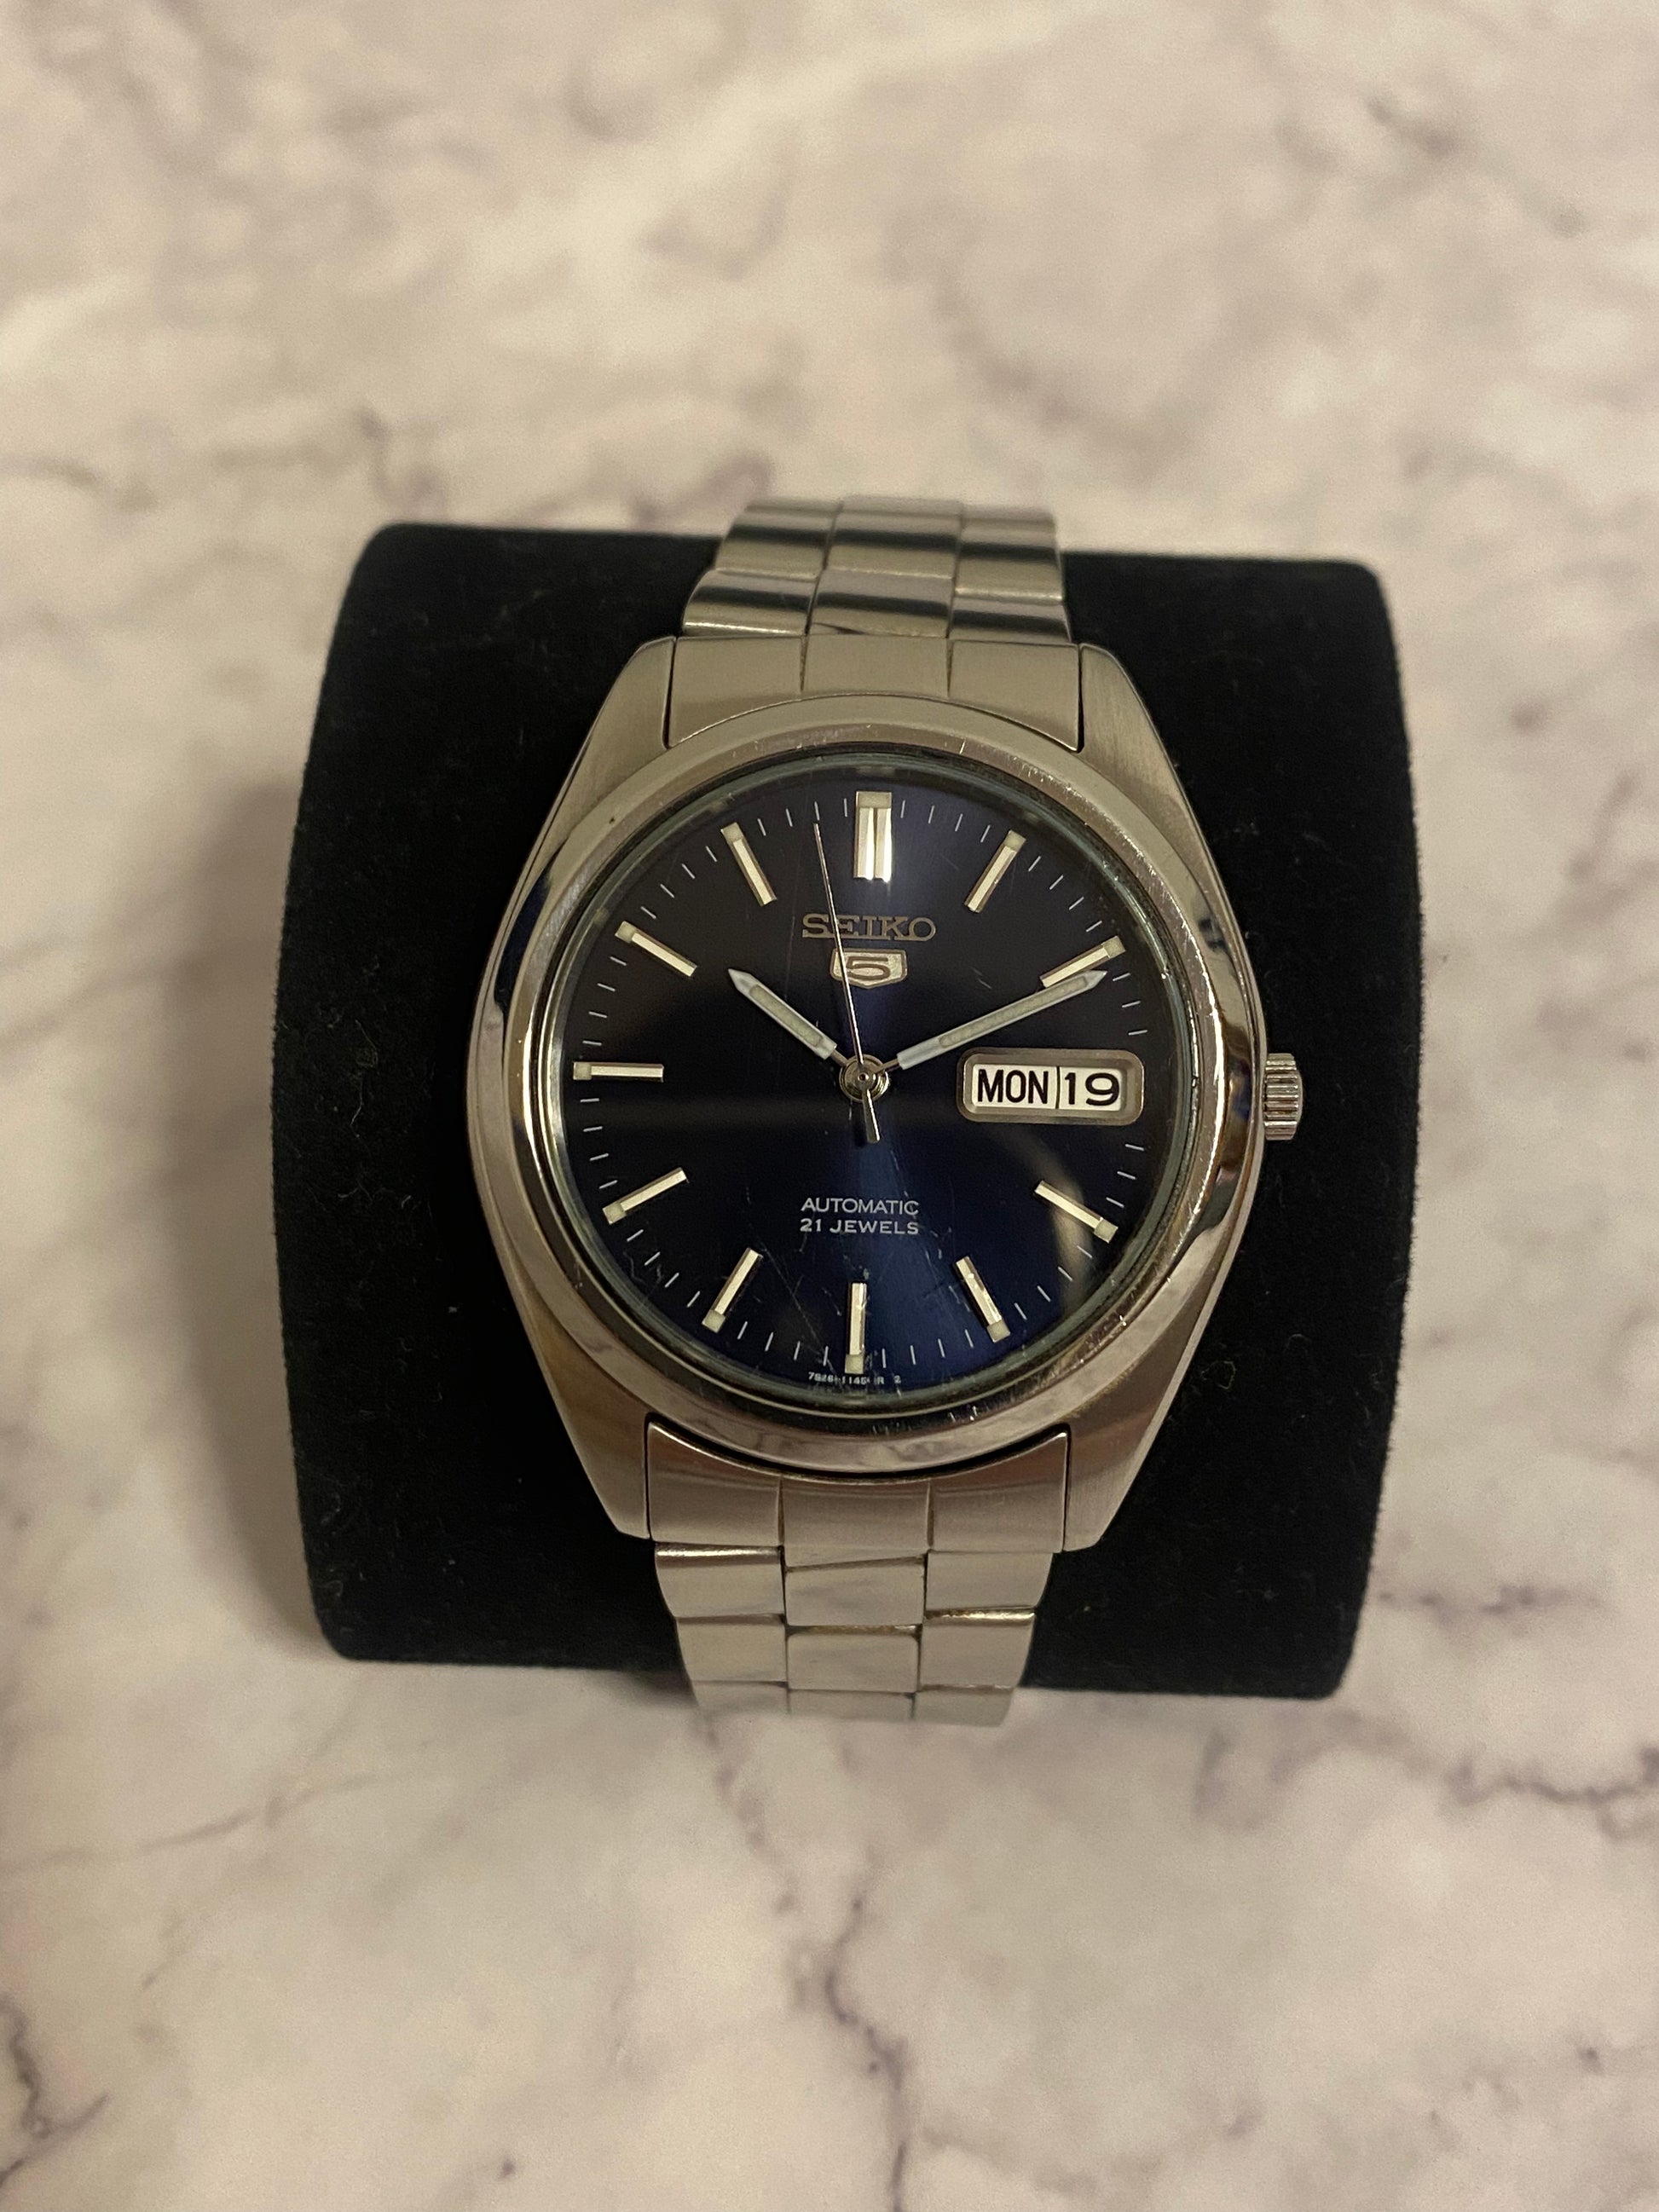 Seiko 5 Automatic 7S26-0060 1999 – The Wrist Watcher